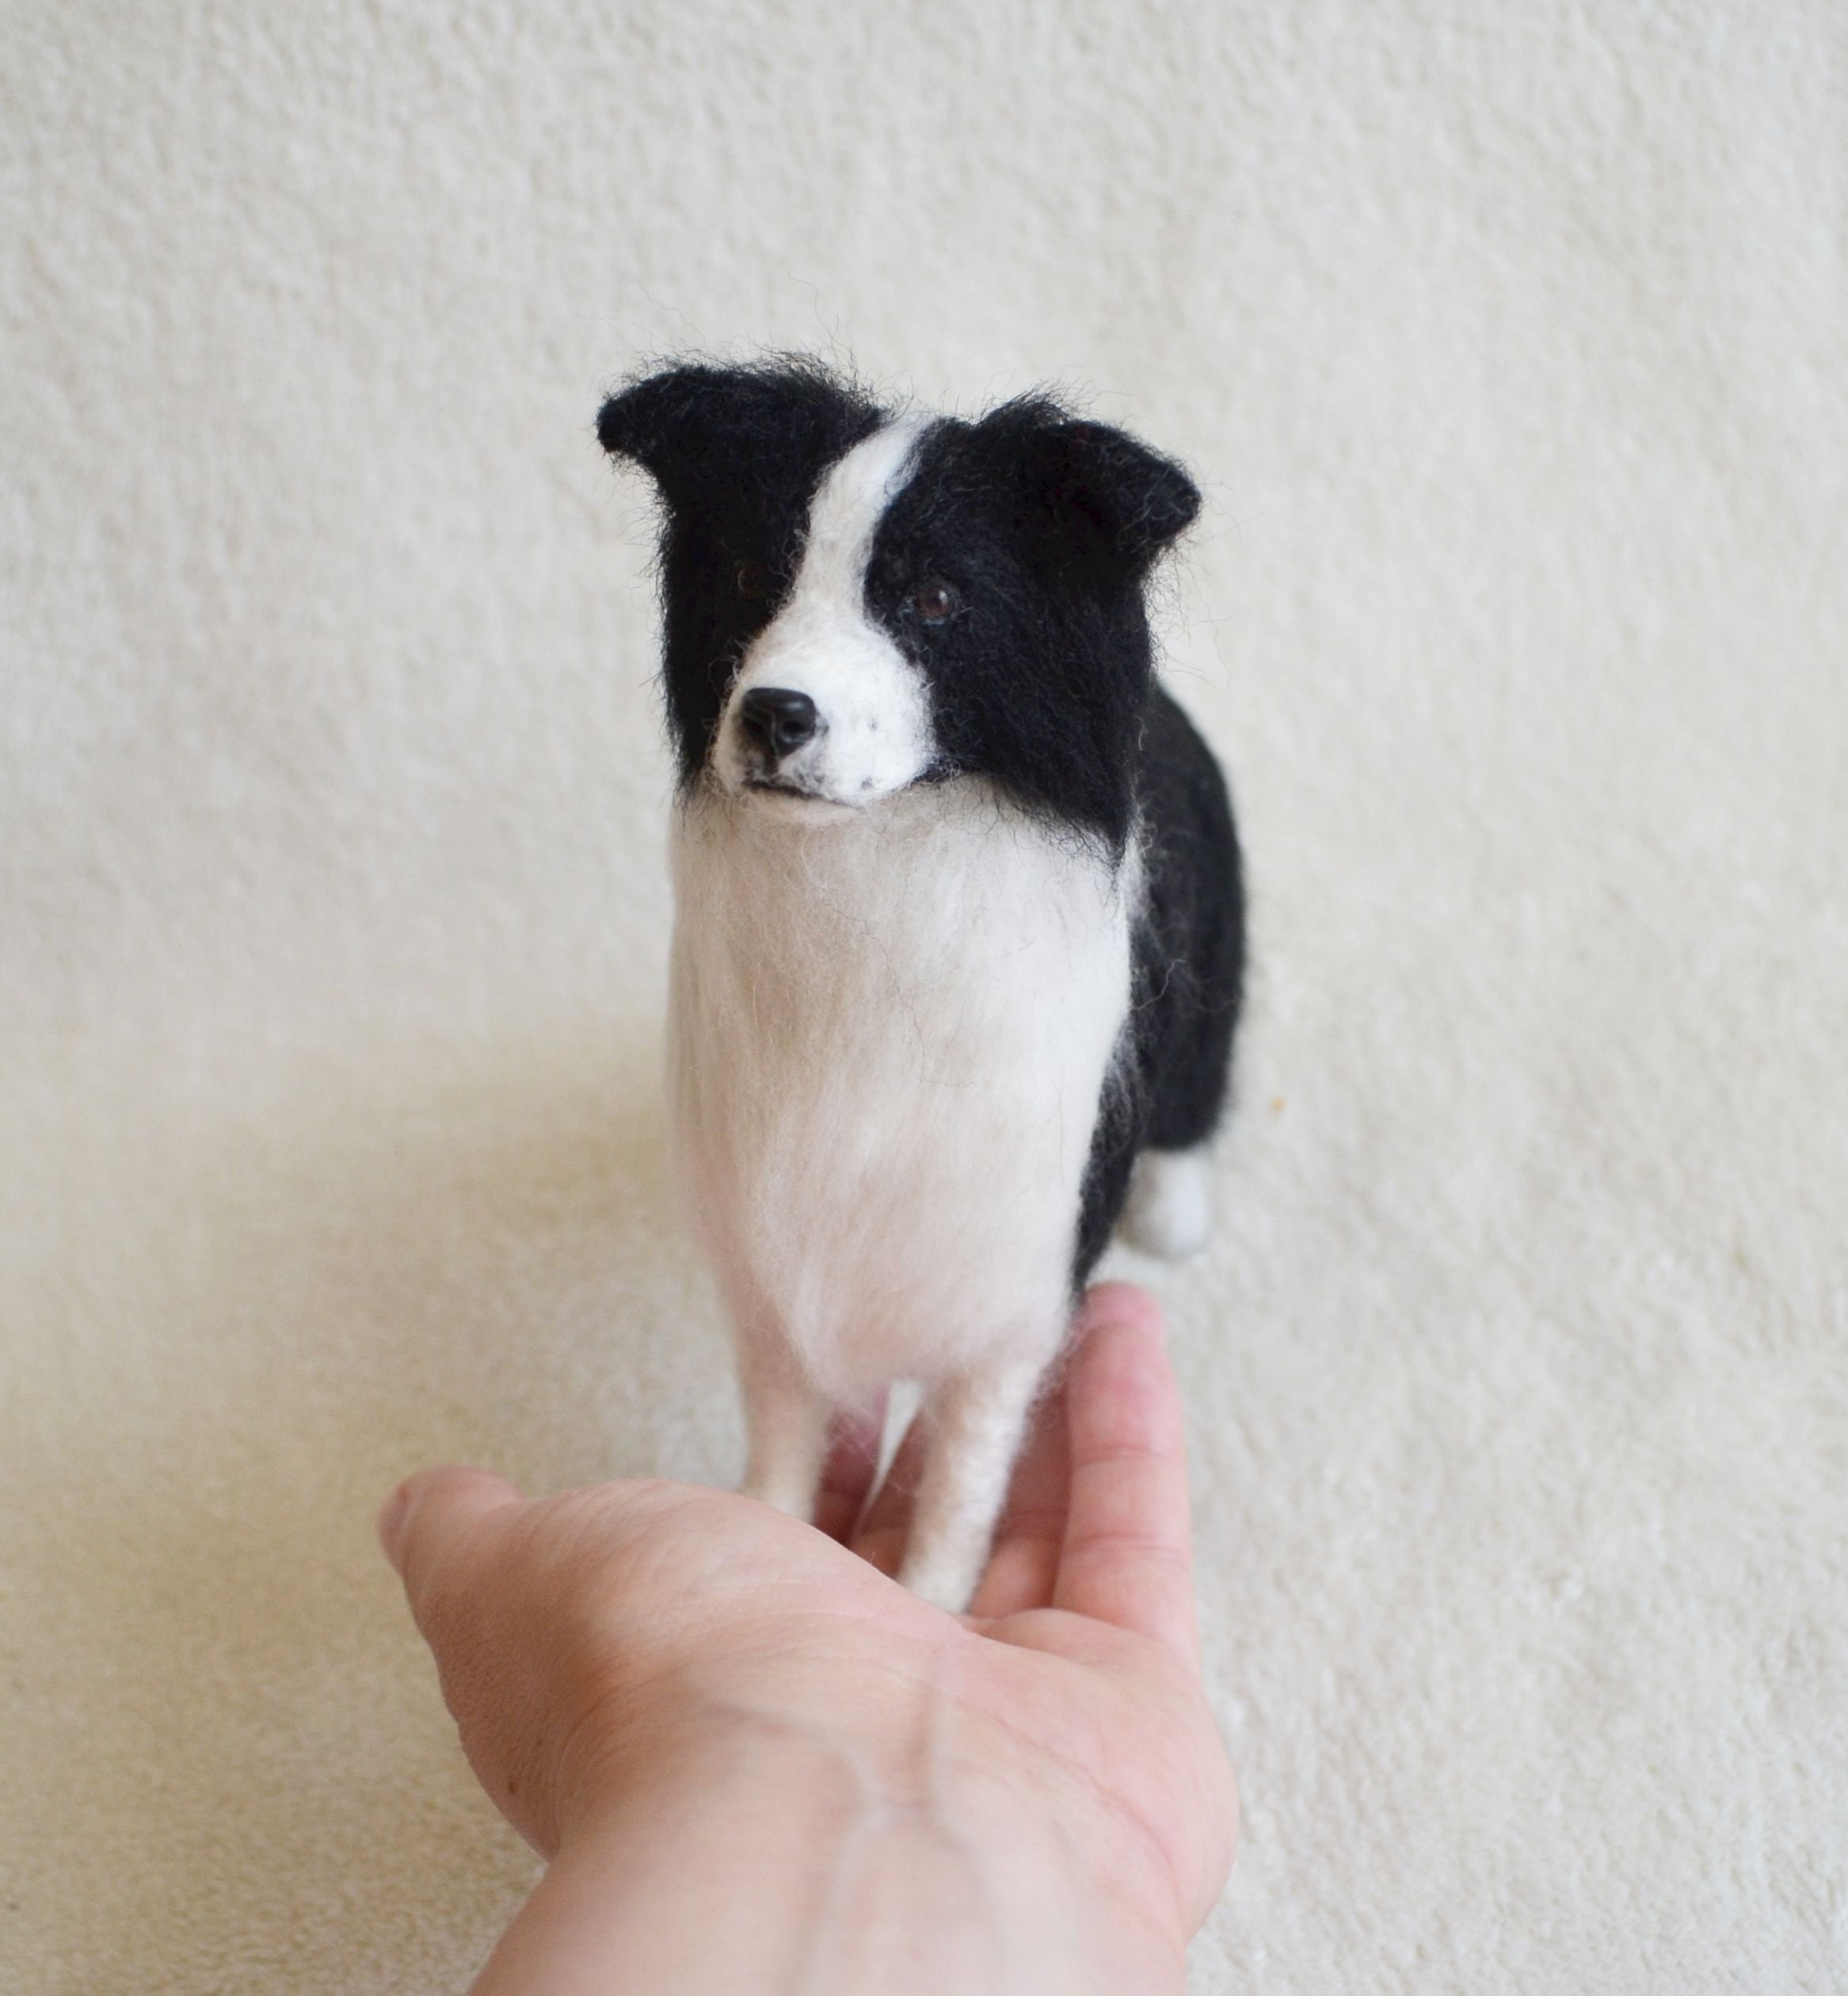 Custom Needle Felted Dog Portrait in Framed-FINISHED PRODUCT